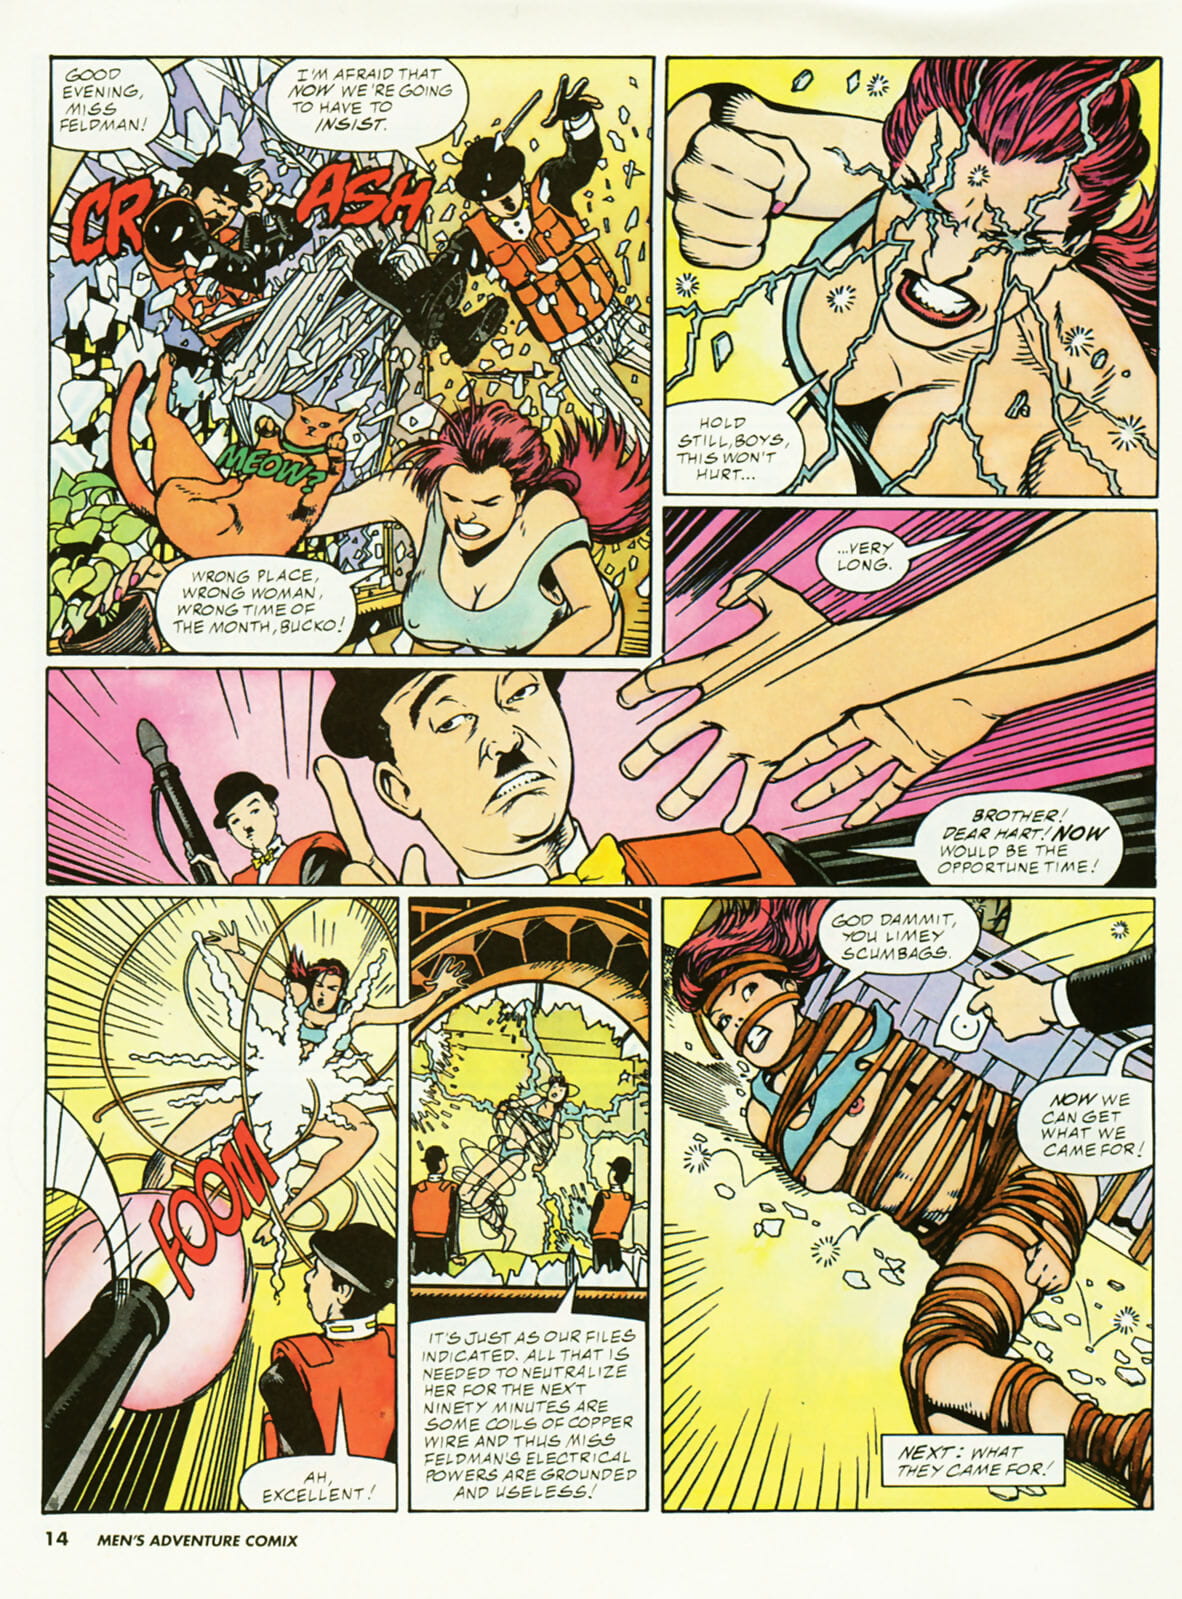 Penthouse Mens Adventure Comix #2 page 1